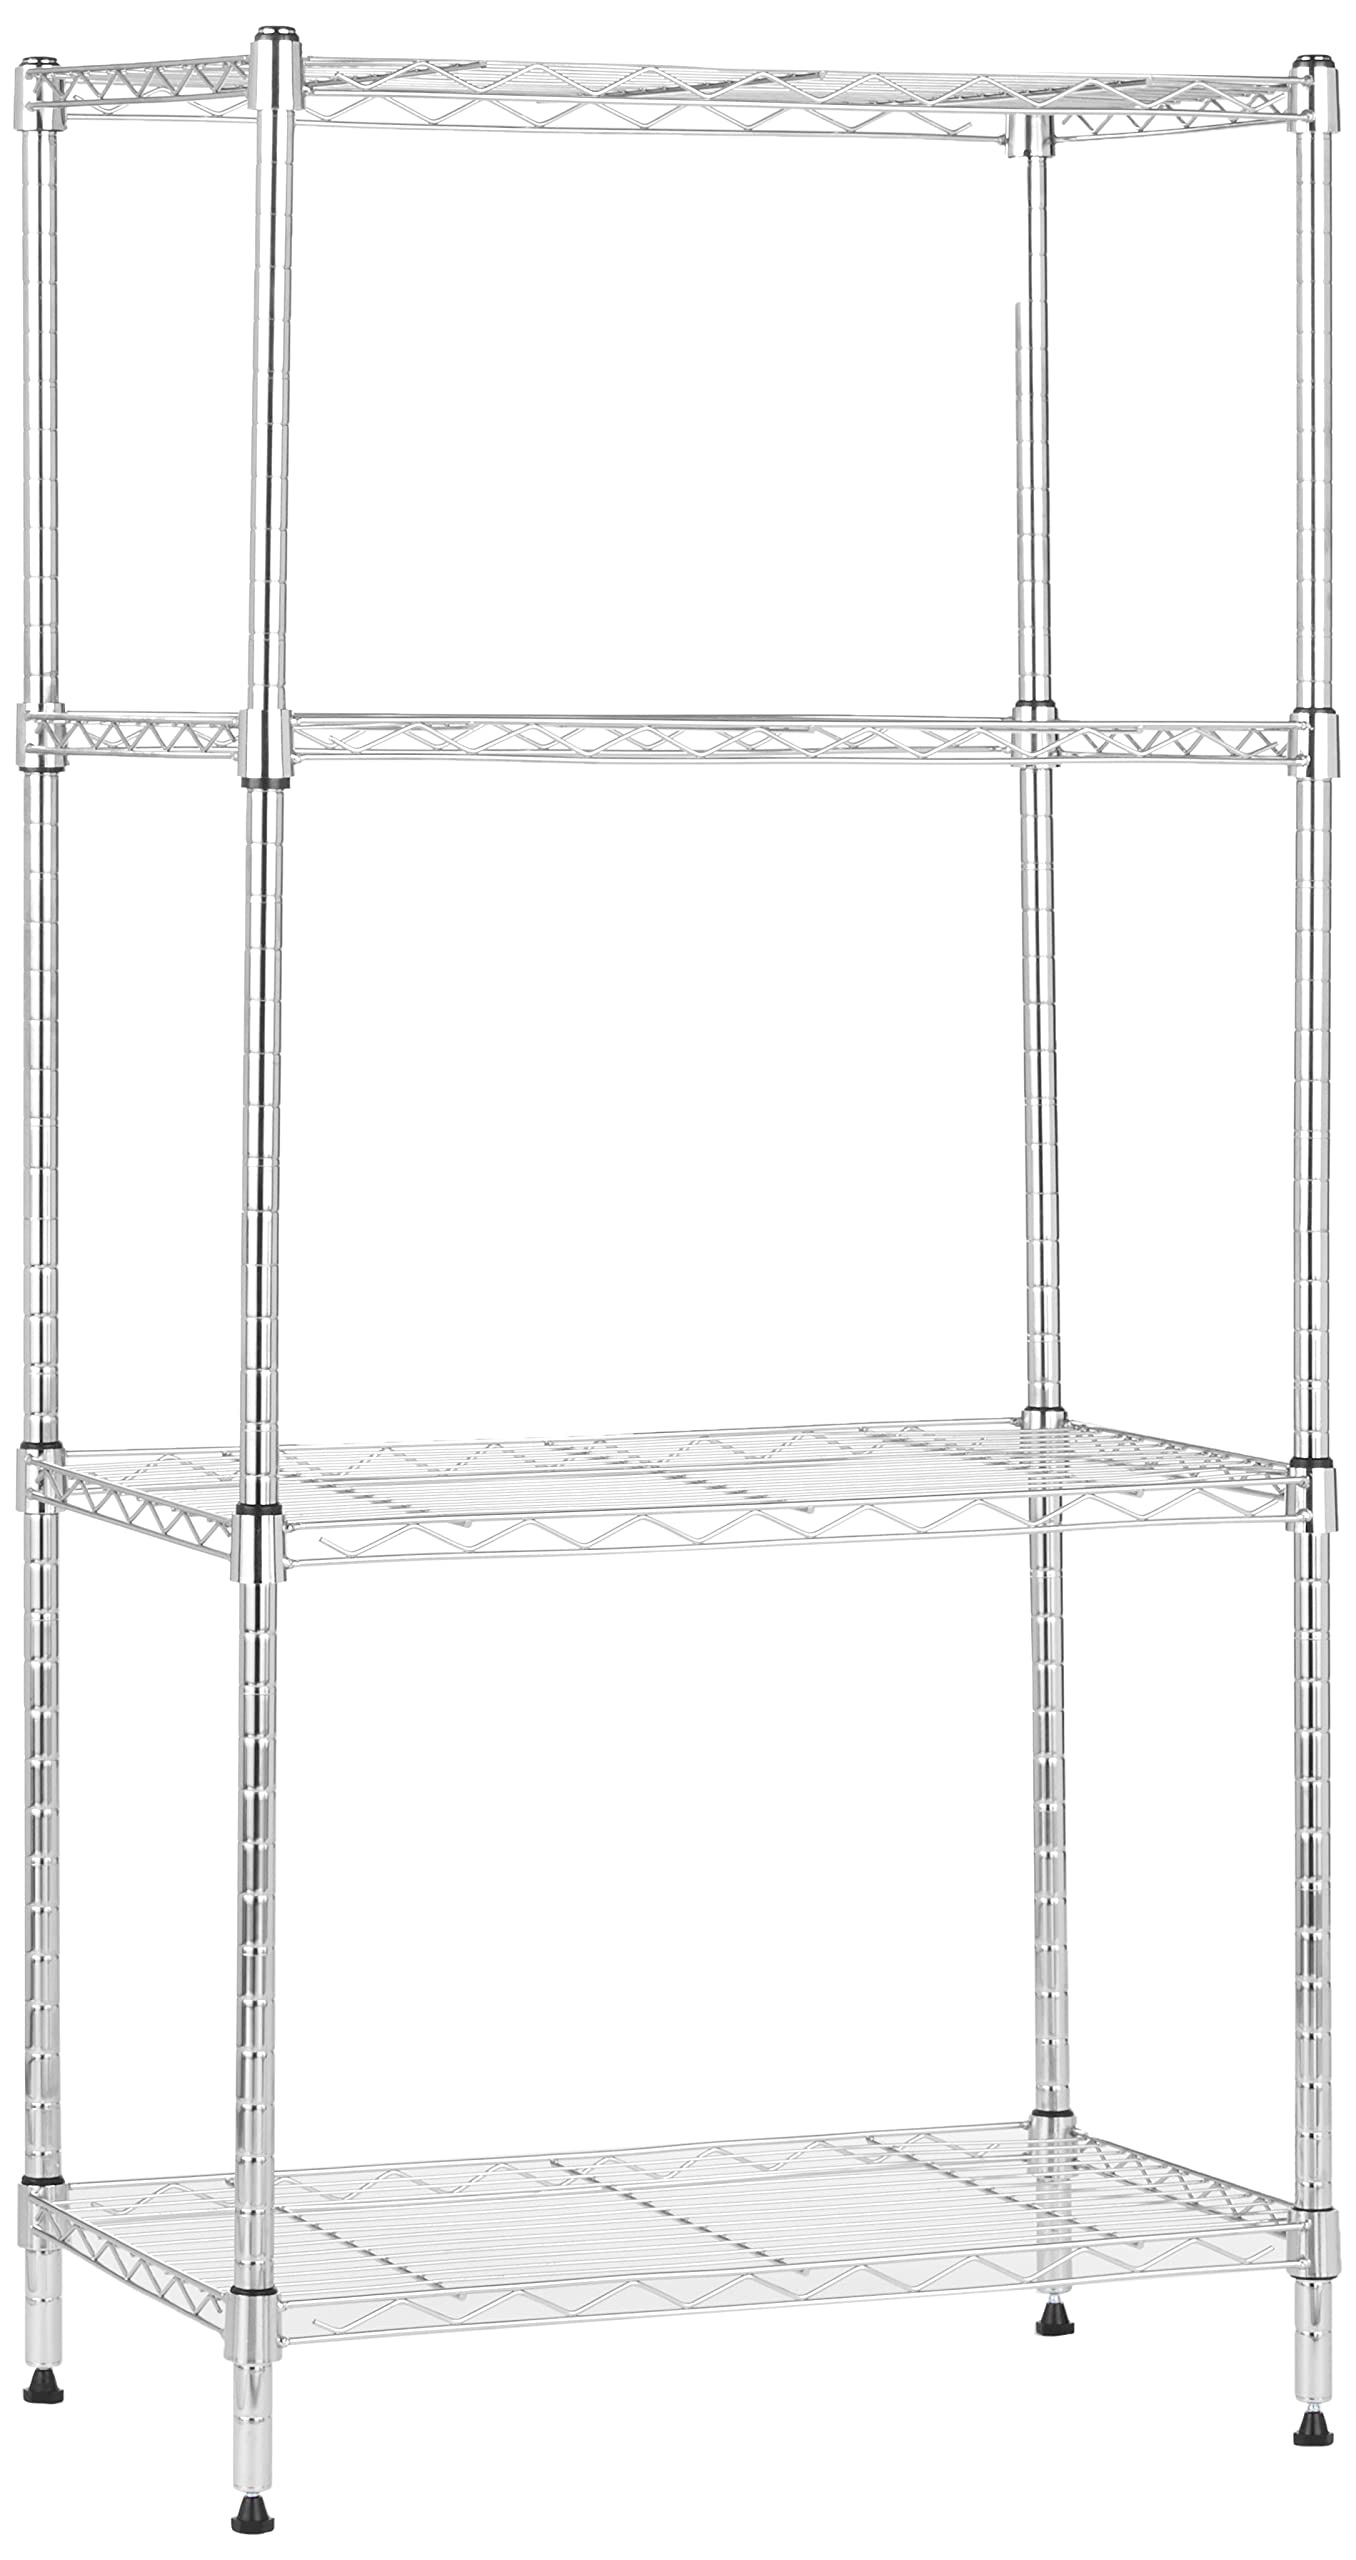 Amazon.com: Amazon Basics 4-Shelf Narrow Adjustable Storage Shelving Unit, 200 Pound Loading Capacity per Shelf, Steel Organizer Wire Rack, 13.4"D x 23.2"W x 48"H, Chrome : Home & Kitchen架子